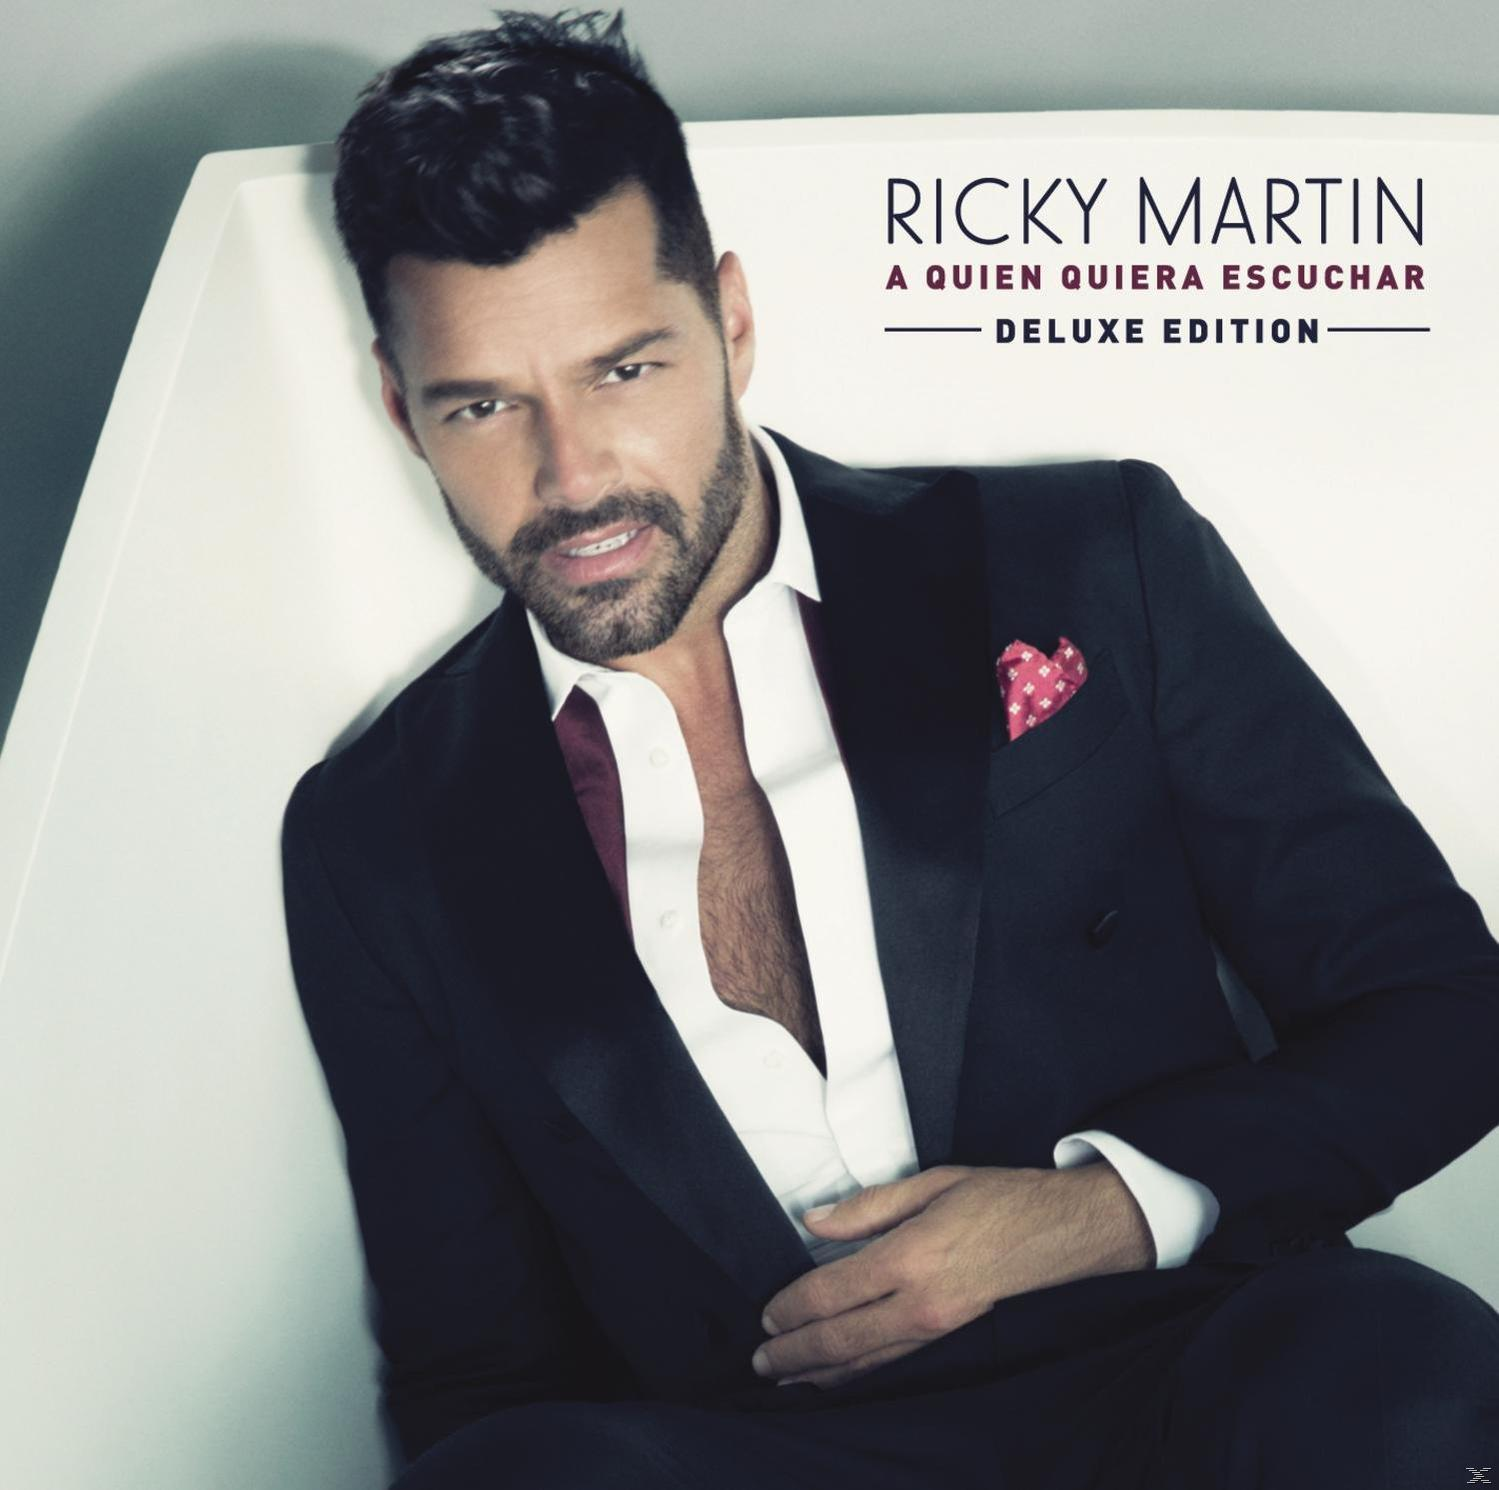 Ricky Martin - A (CD) - Quien Quiera Escuchar